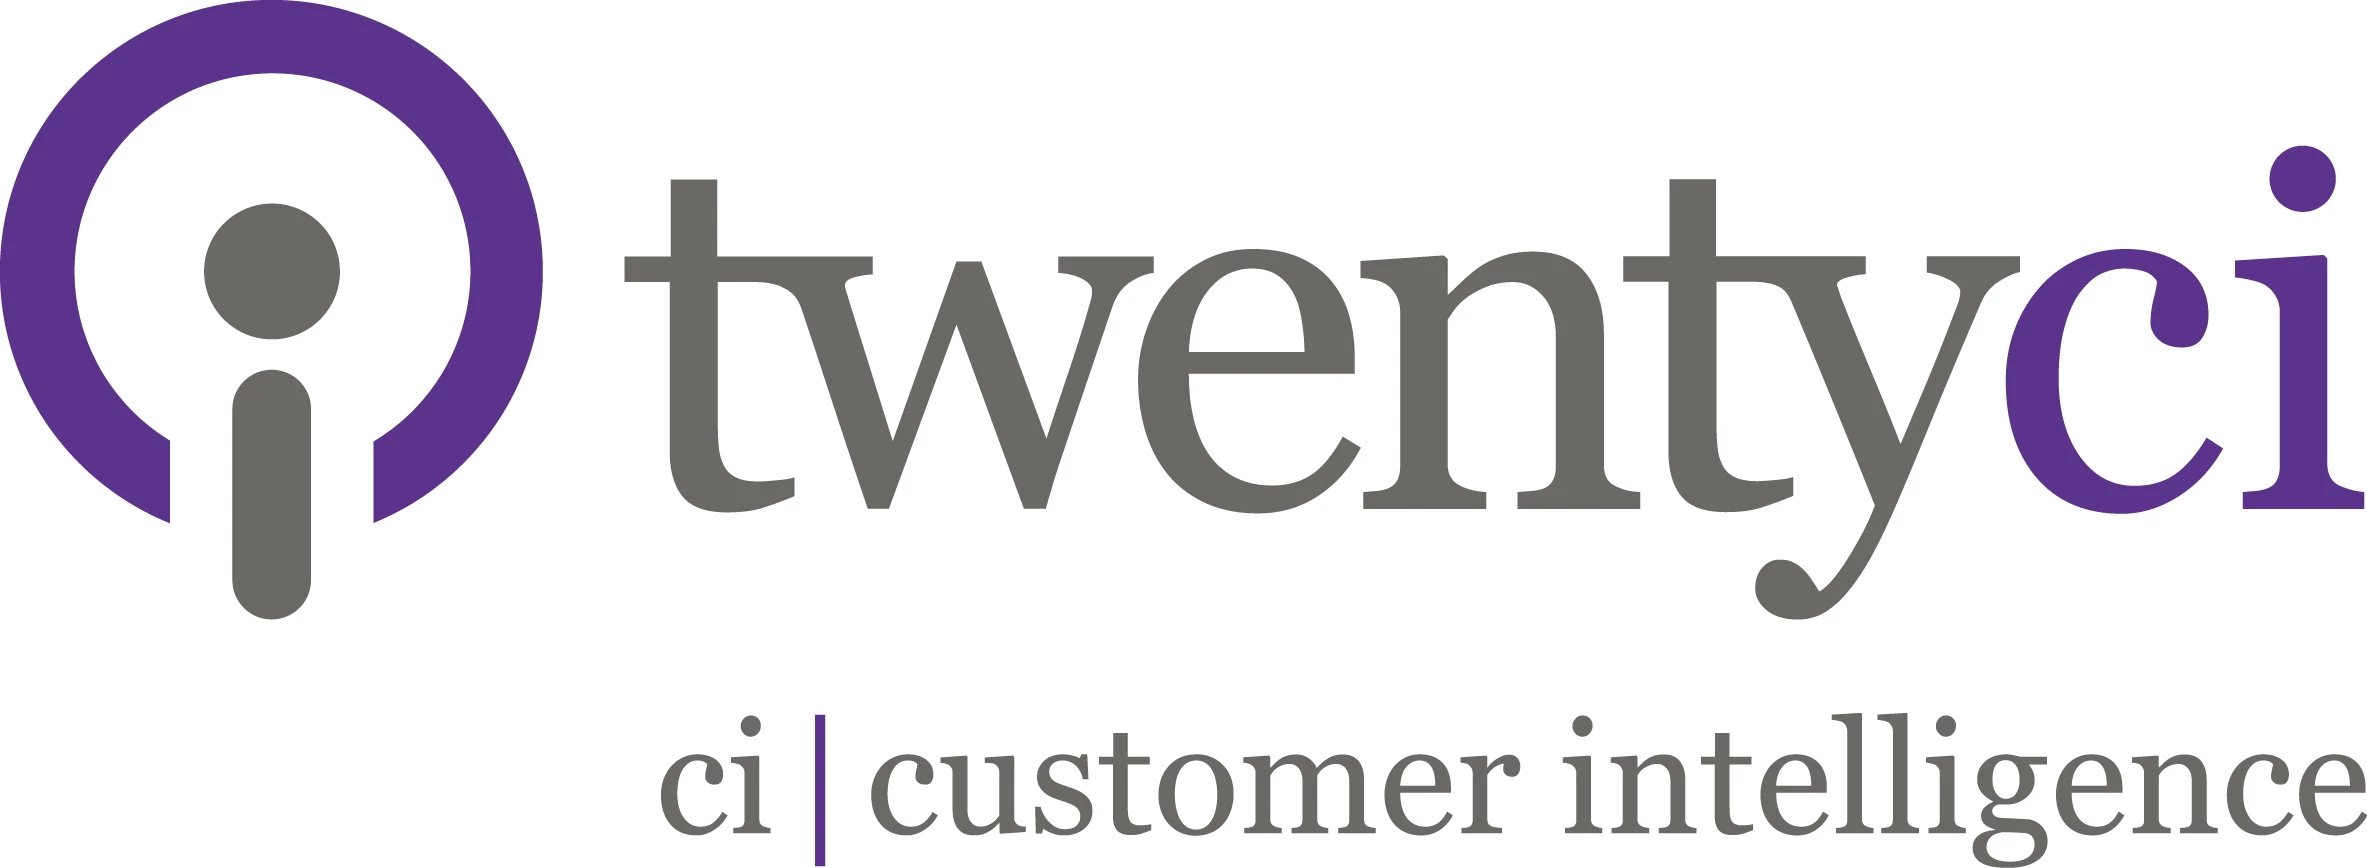 TwentyCi - customer insights company